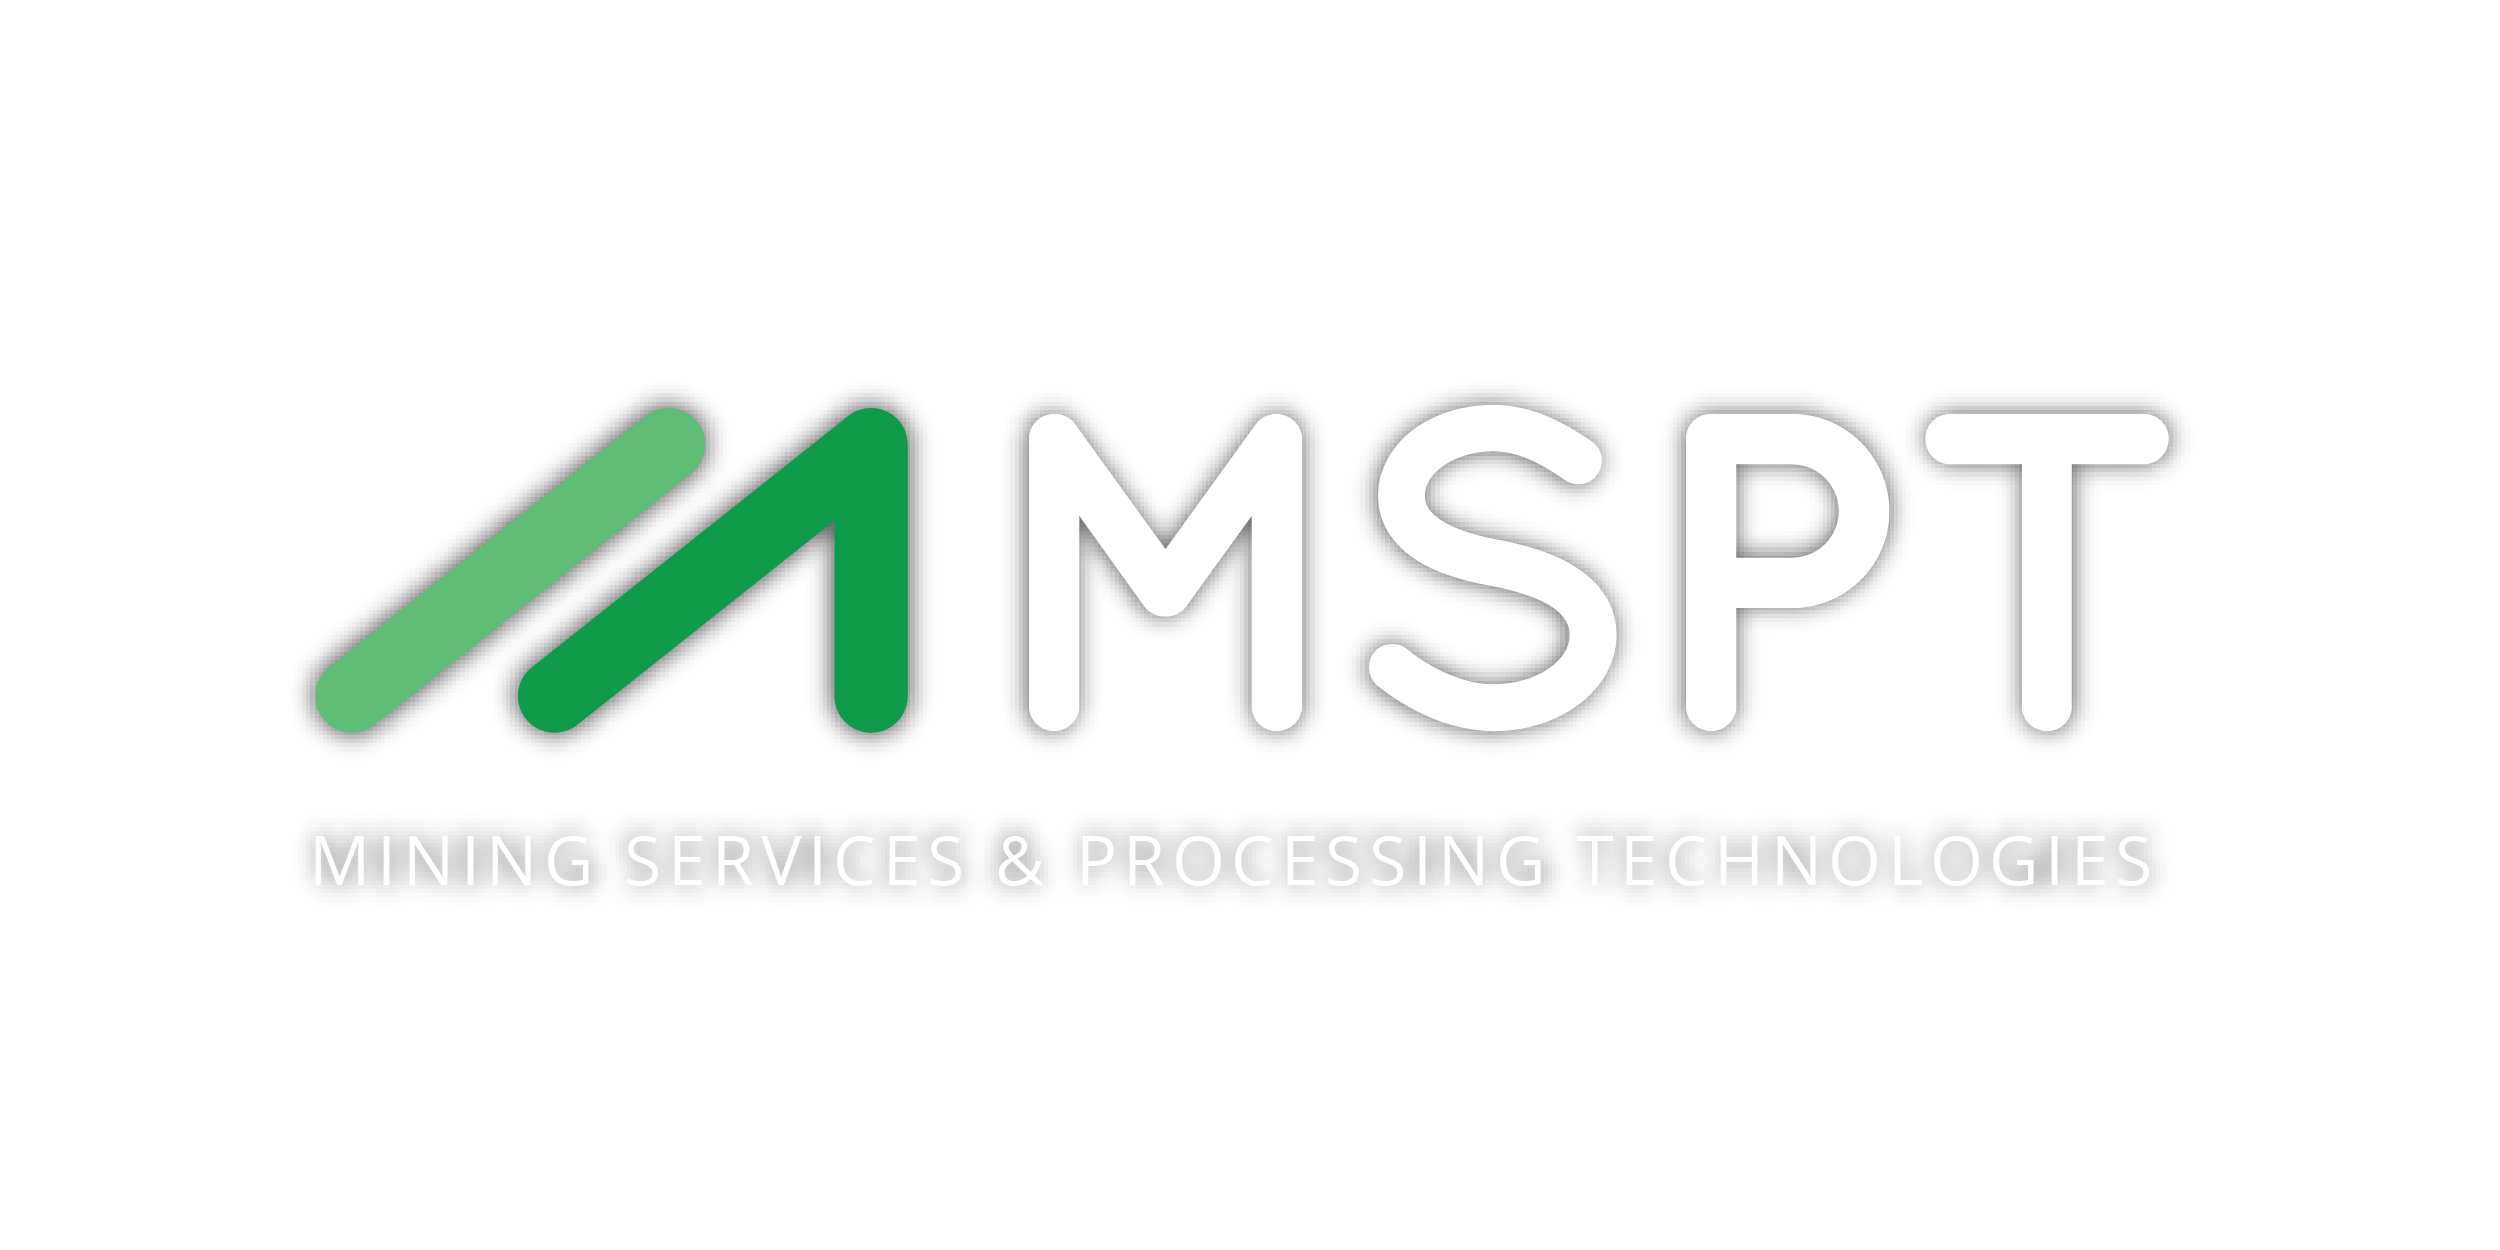 Mspt Logo - MSPT Services & Processing Technologies in Western Australia